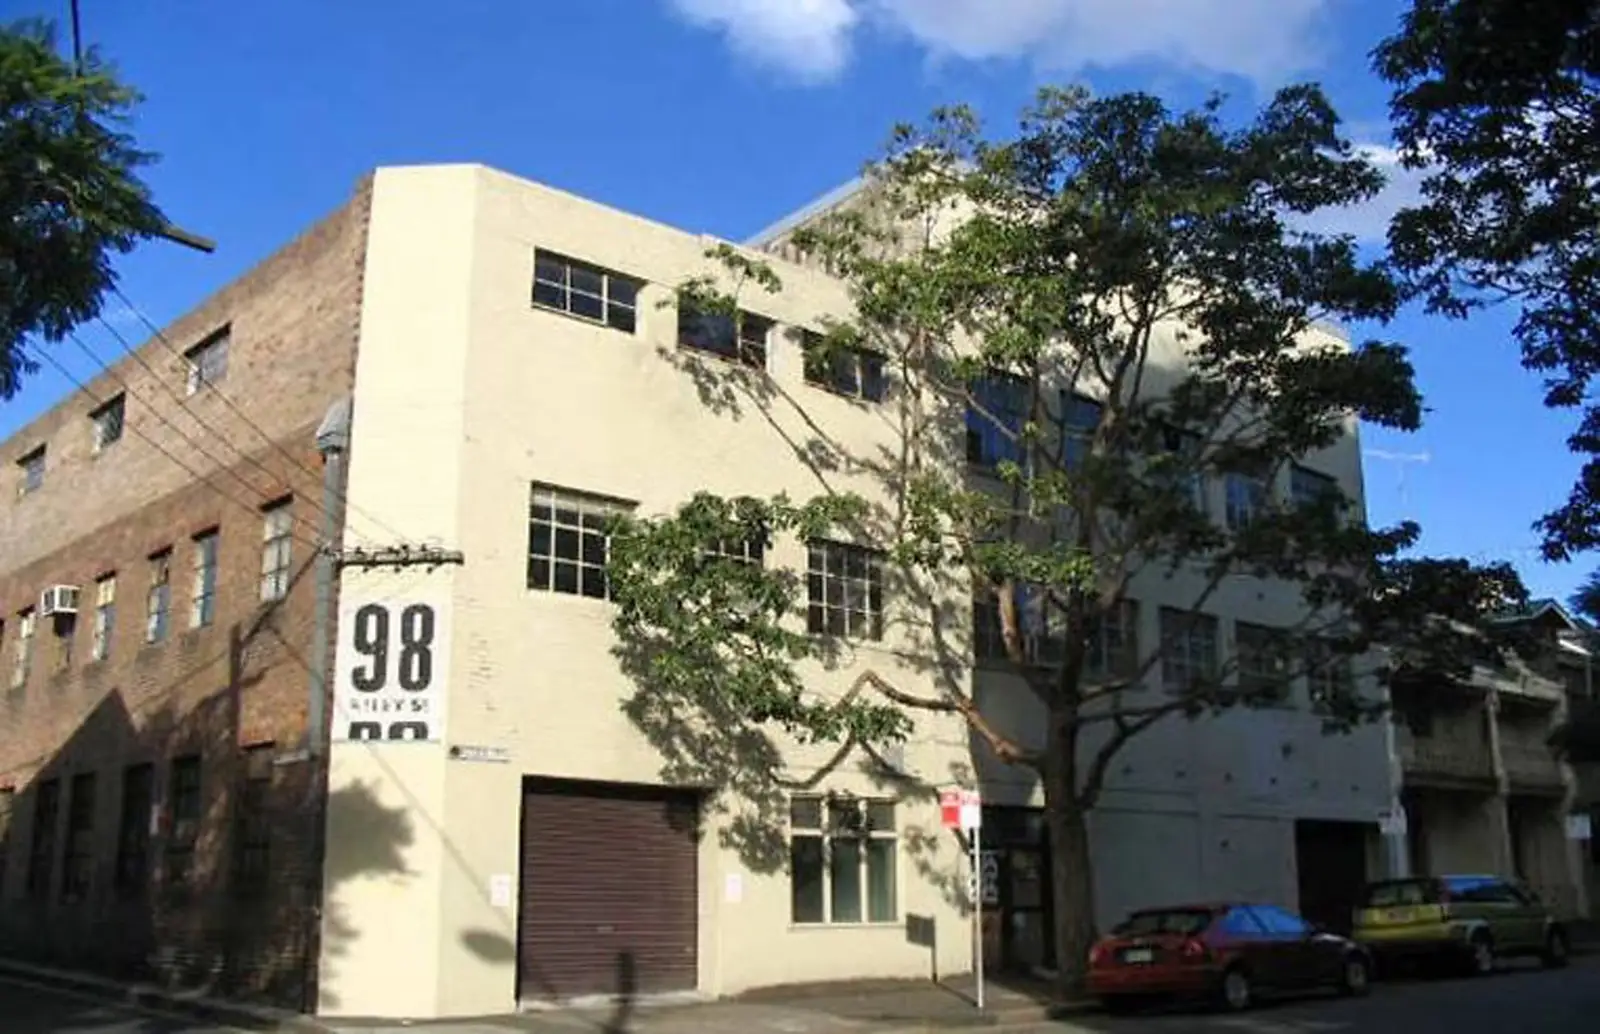 98 Riley Street, East Sydney Sold by Sydney Sotheby's International Realty - image 1